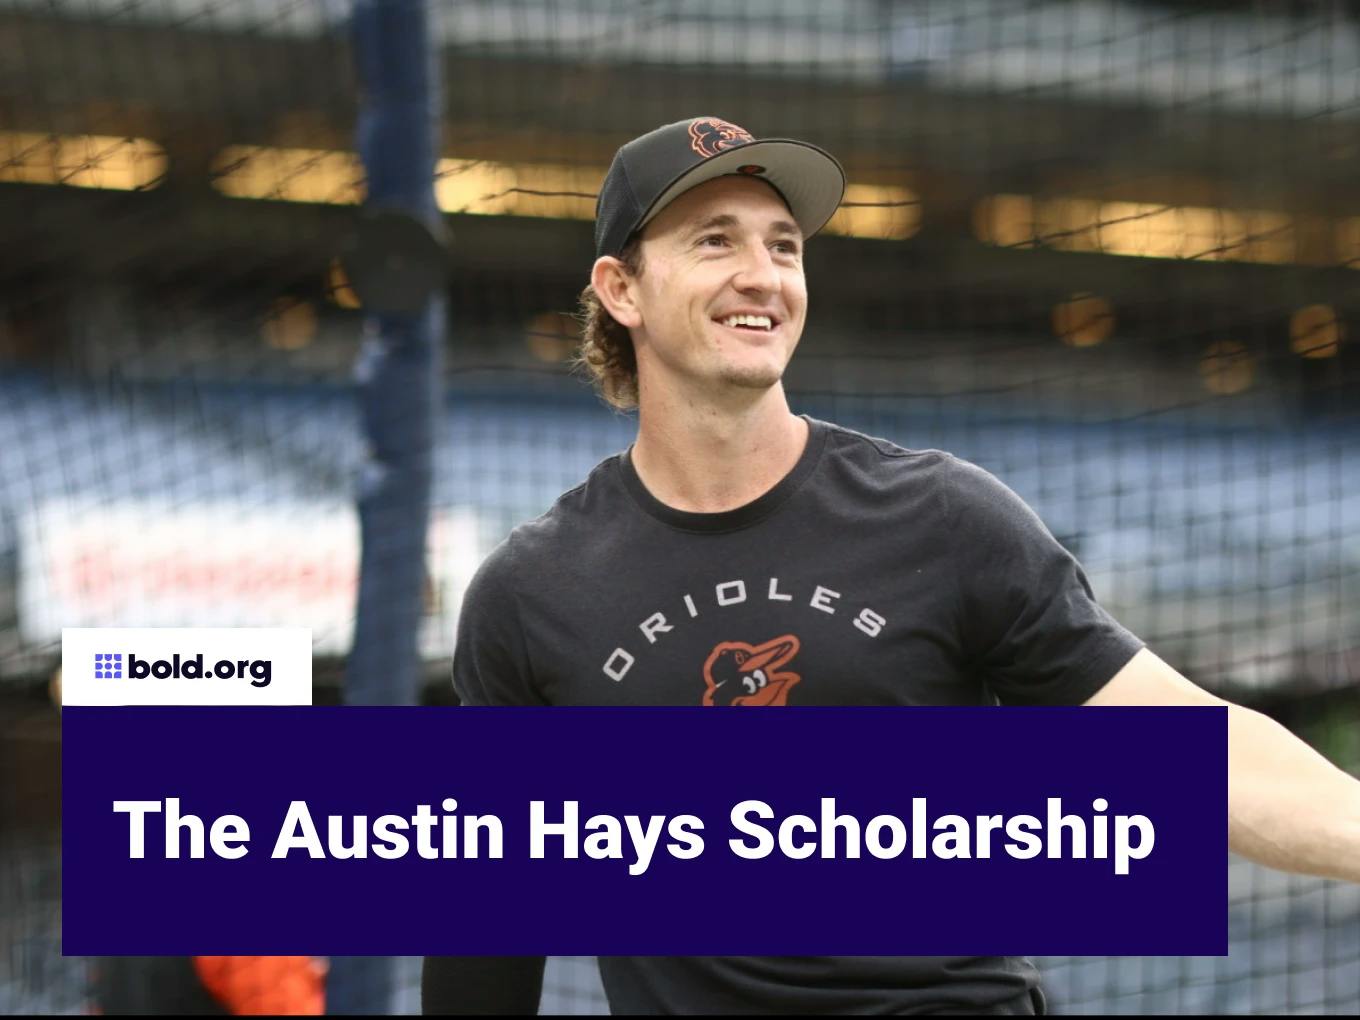 The Austin Hays Scholarship